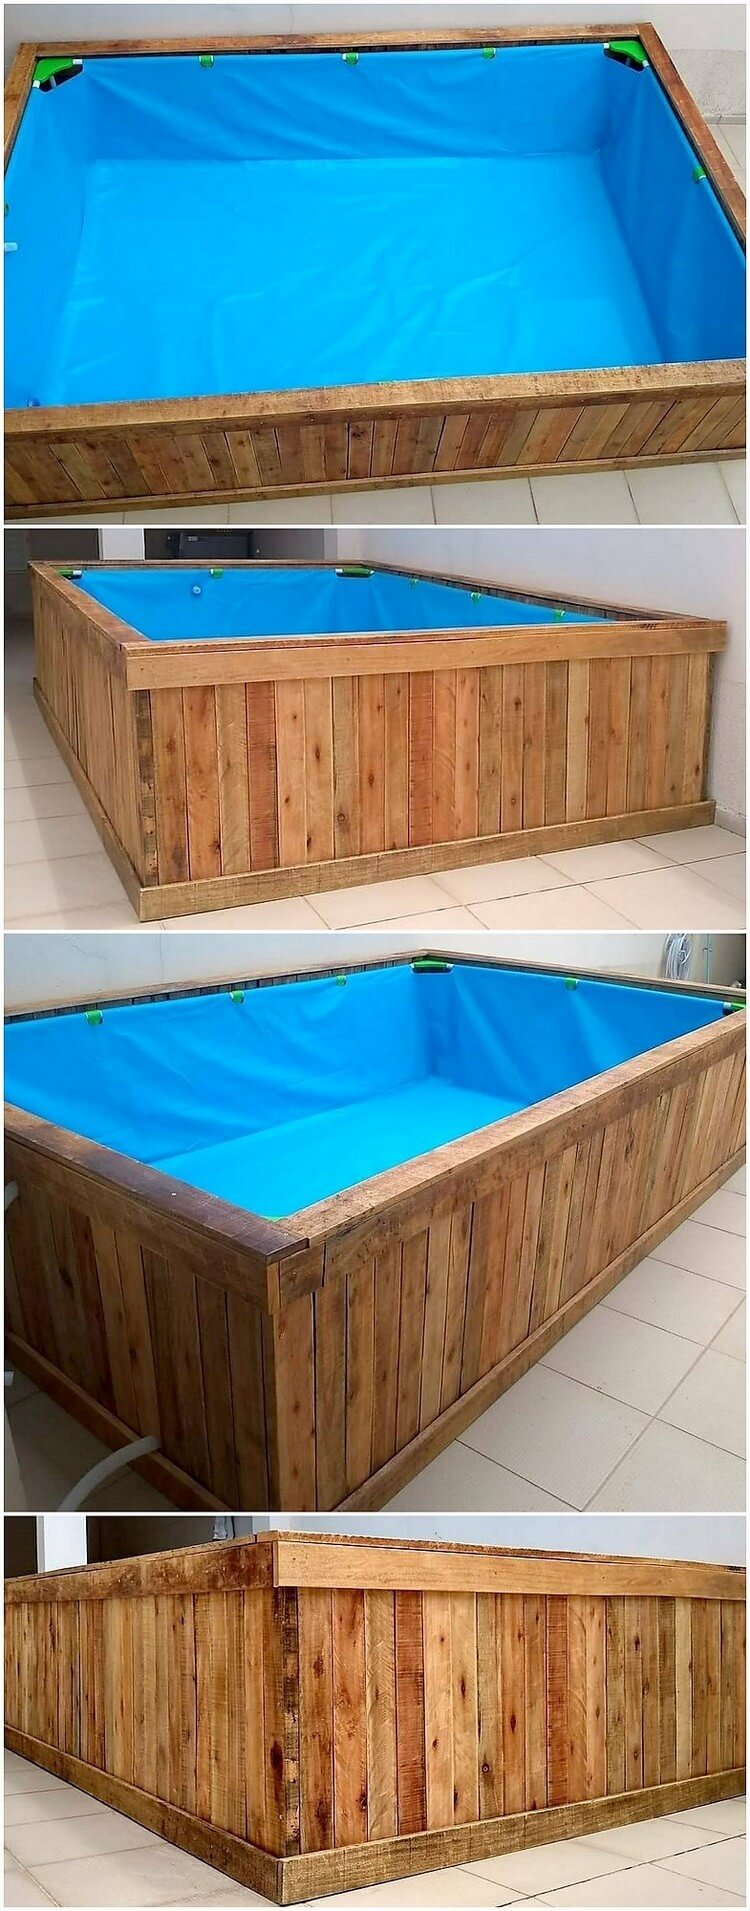 Pallet Swimming Pool for Kids